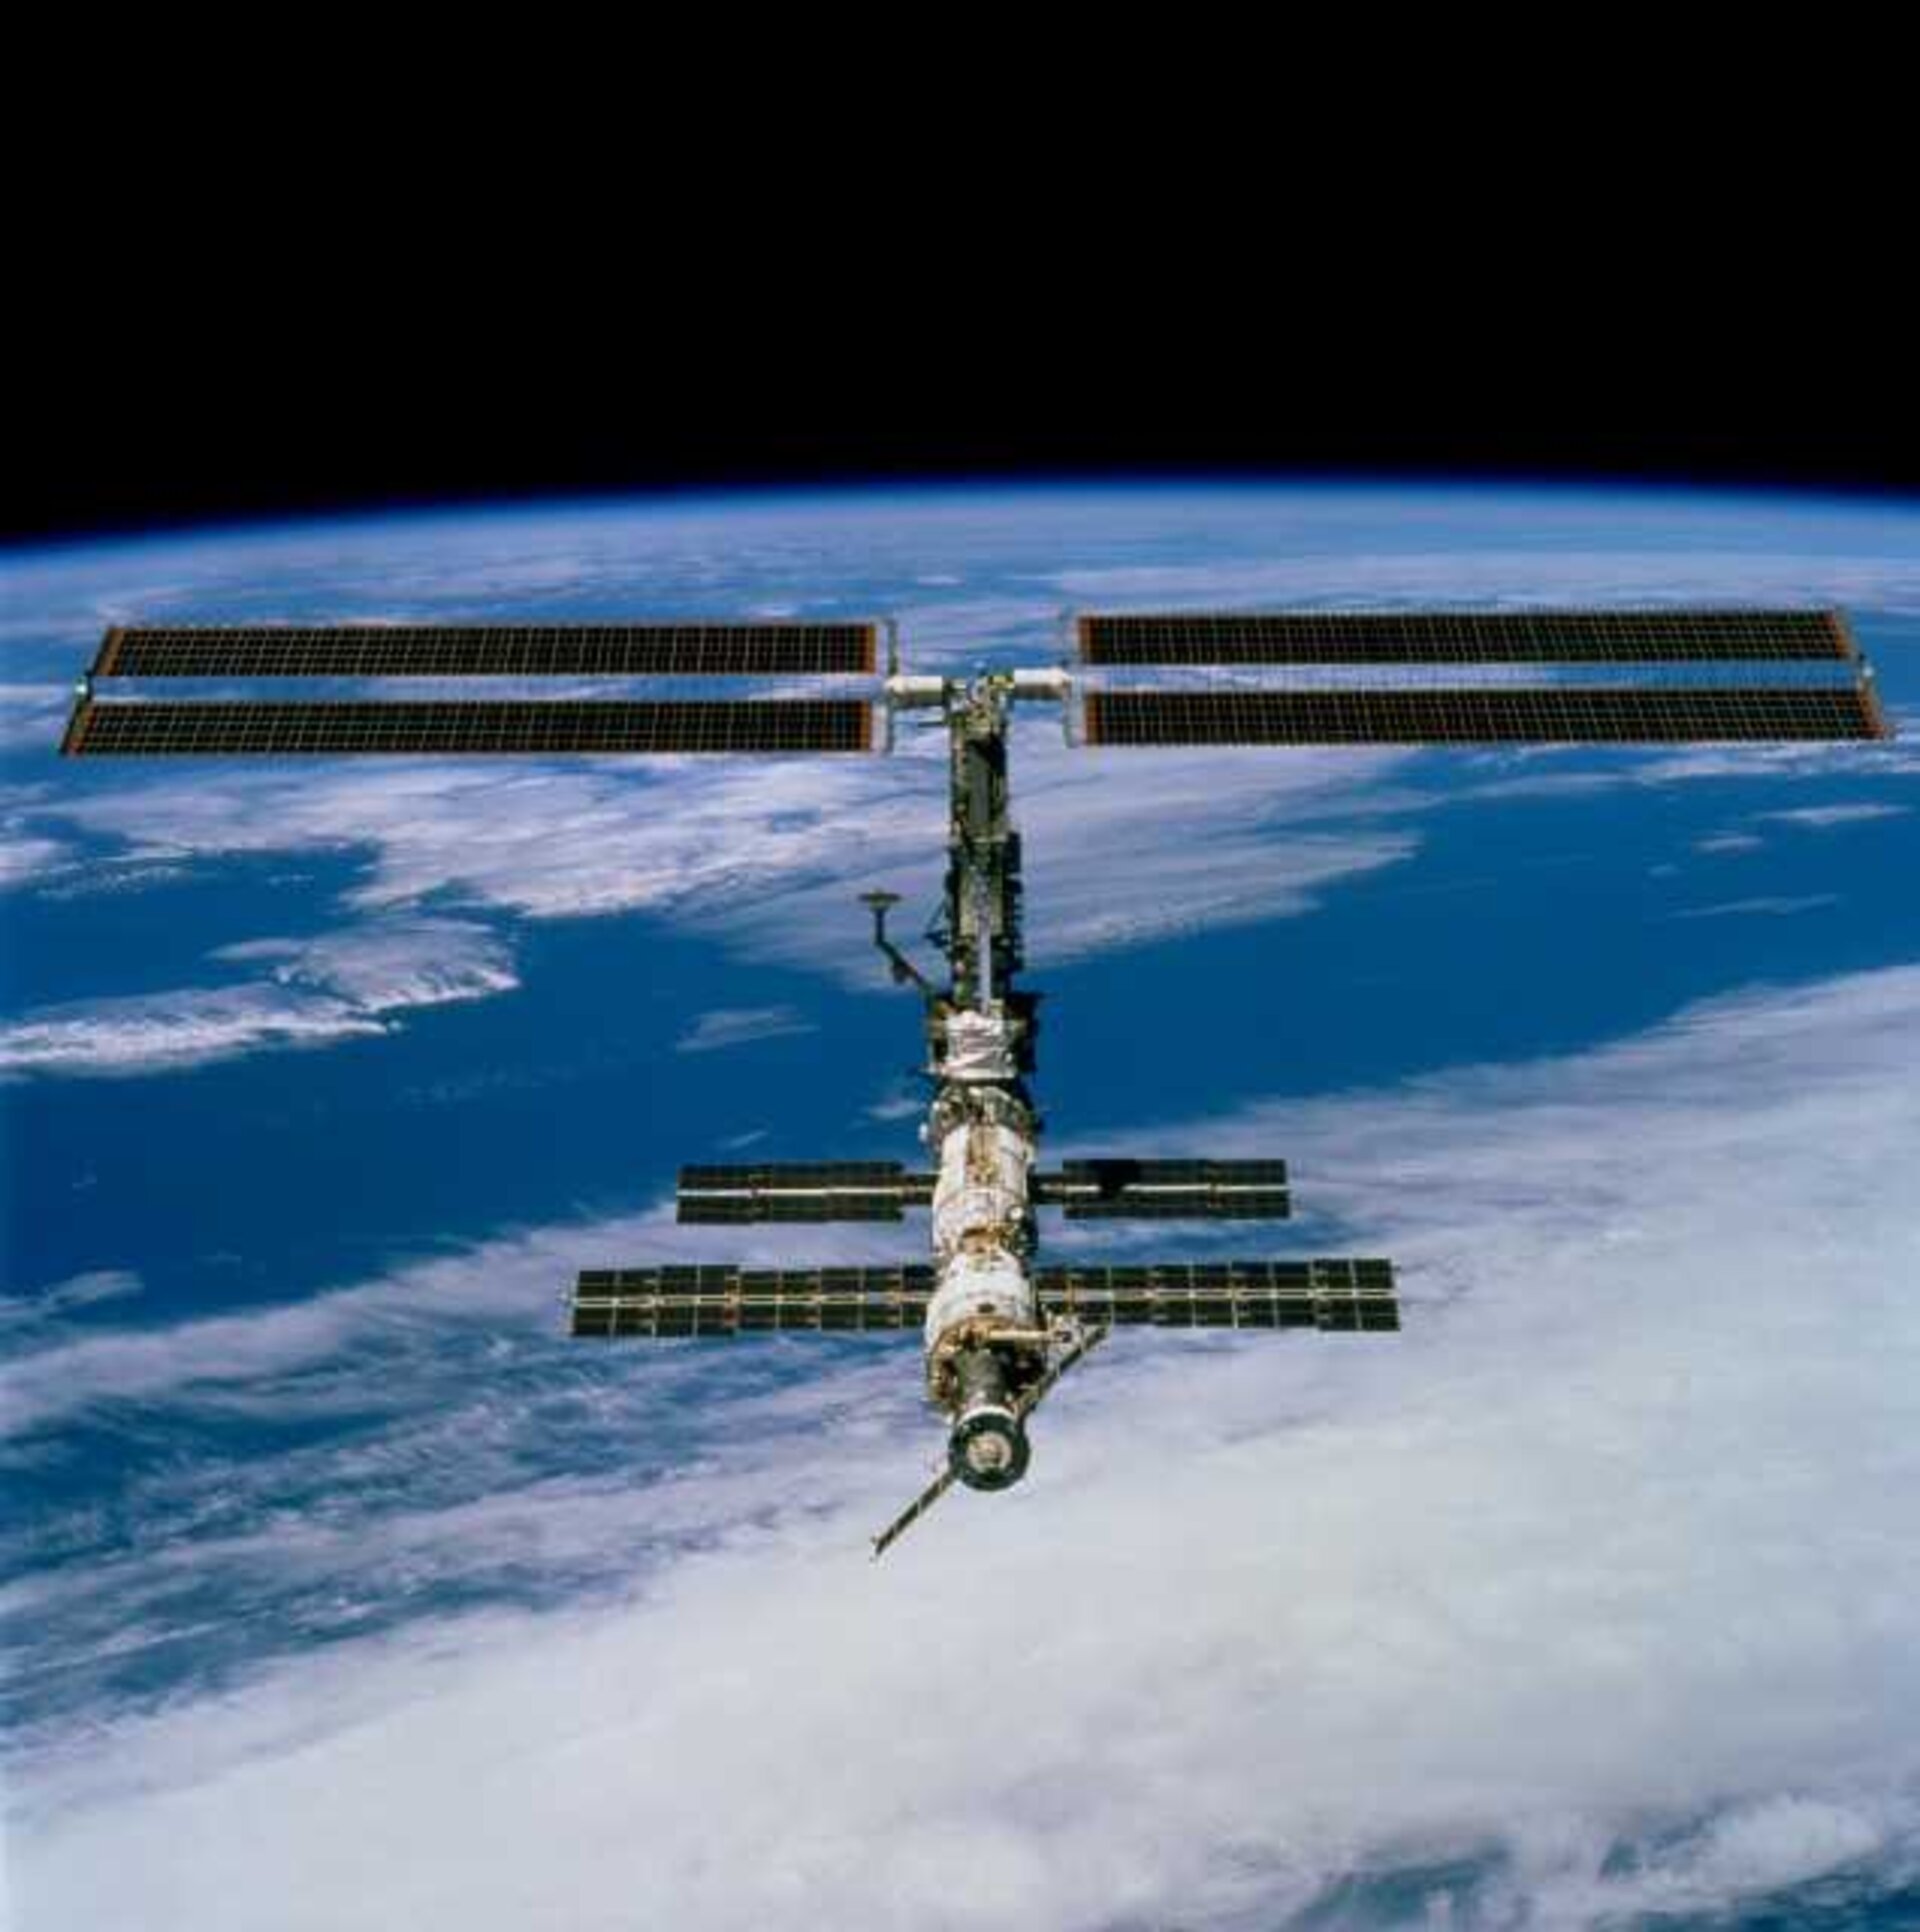 Vittori will perform a full experimental programme on board ISS